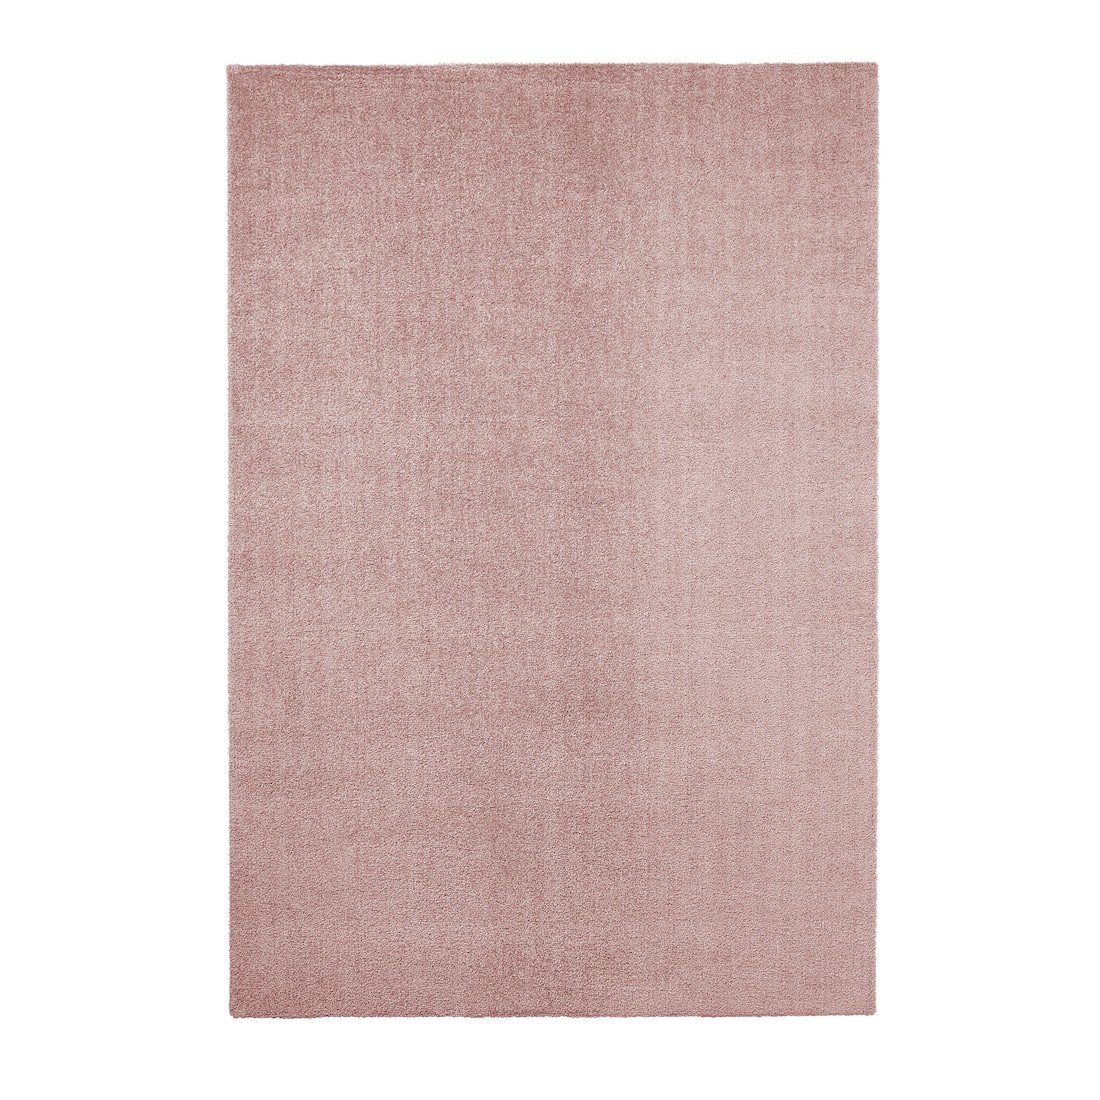 IKEA KNARDRUP Ковер с коротким ворсом, бледно-розовый, 133x195 см 50492613 | 504.926.13